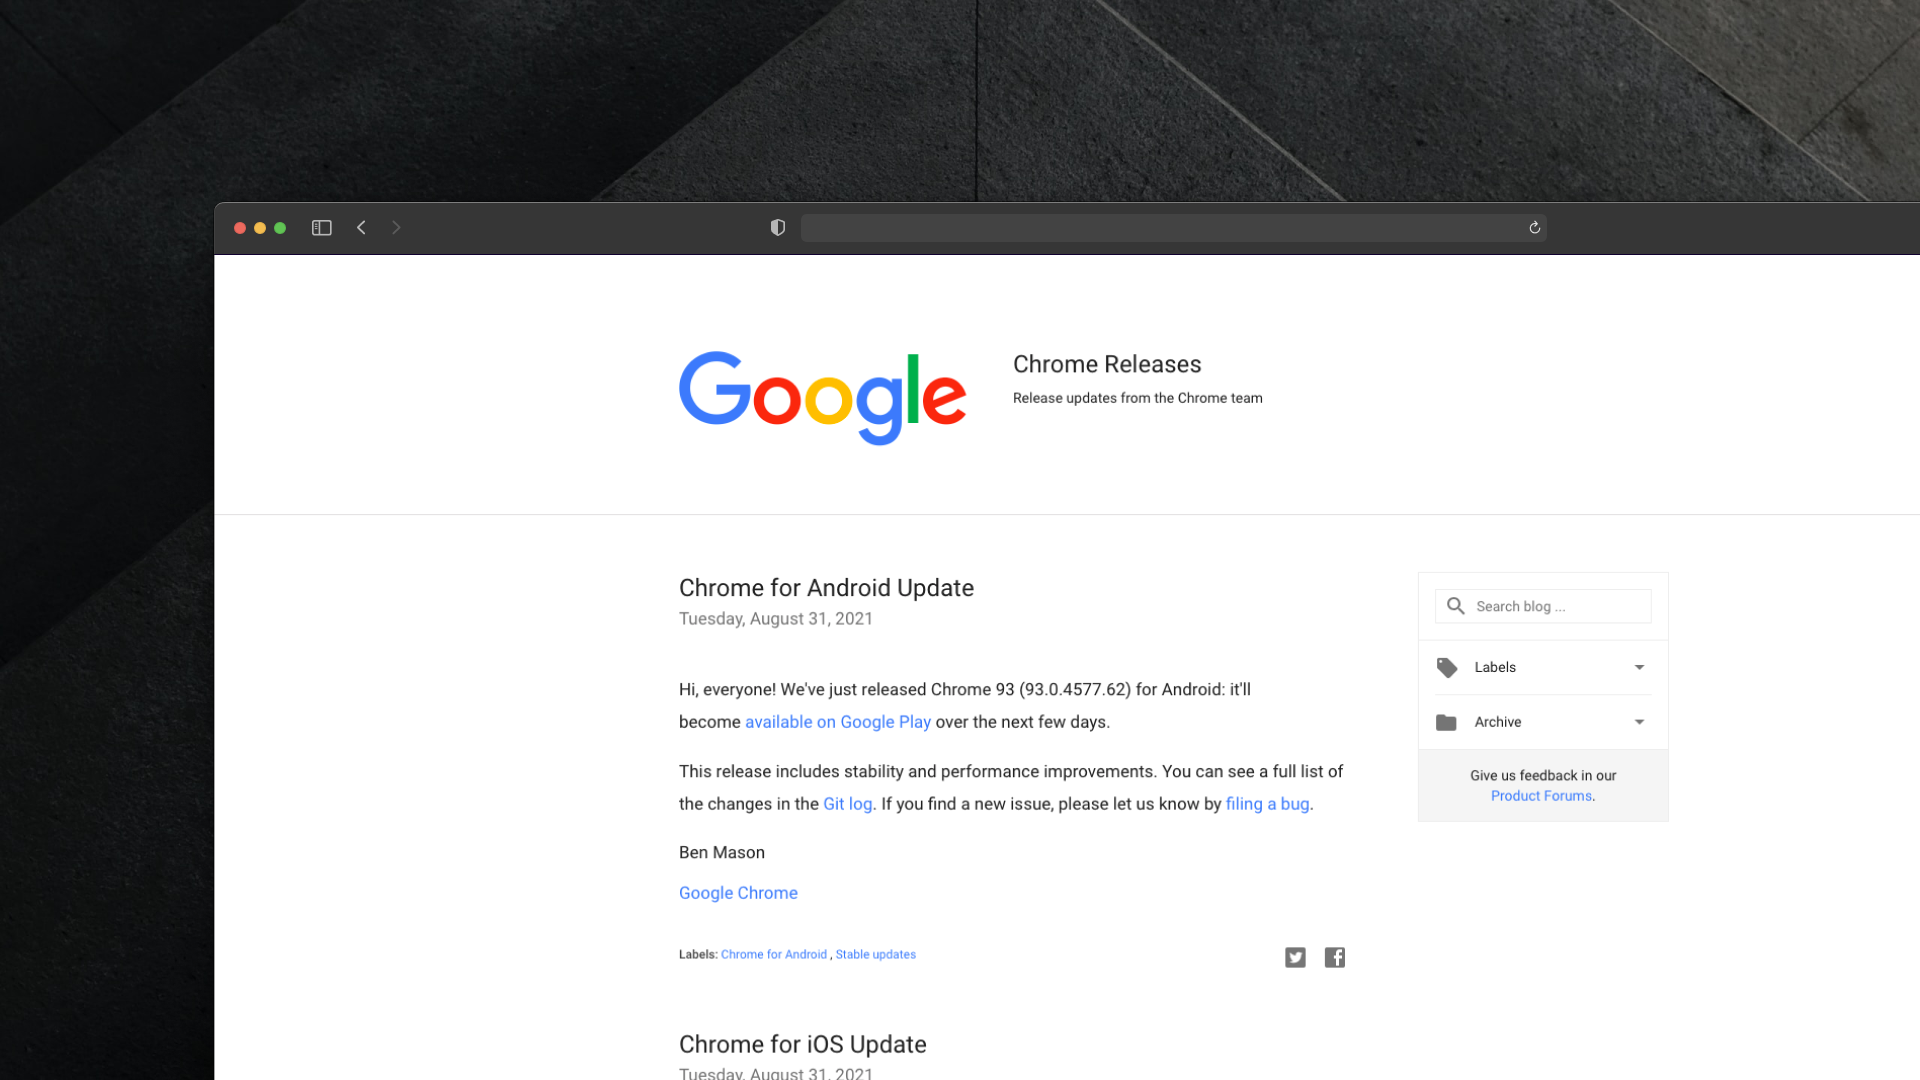 Google Chrome Releases changelog screenshot